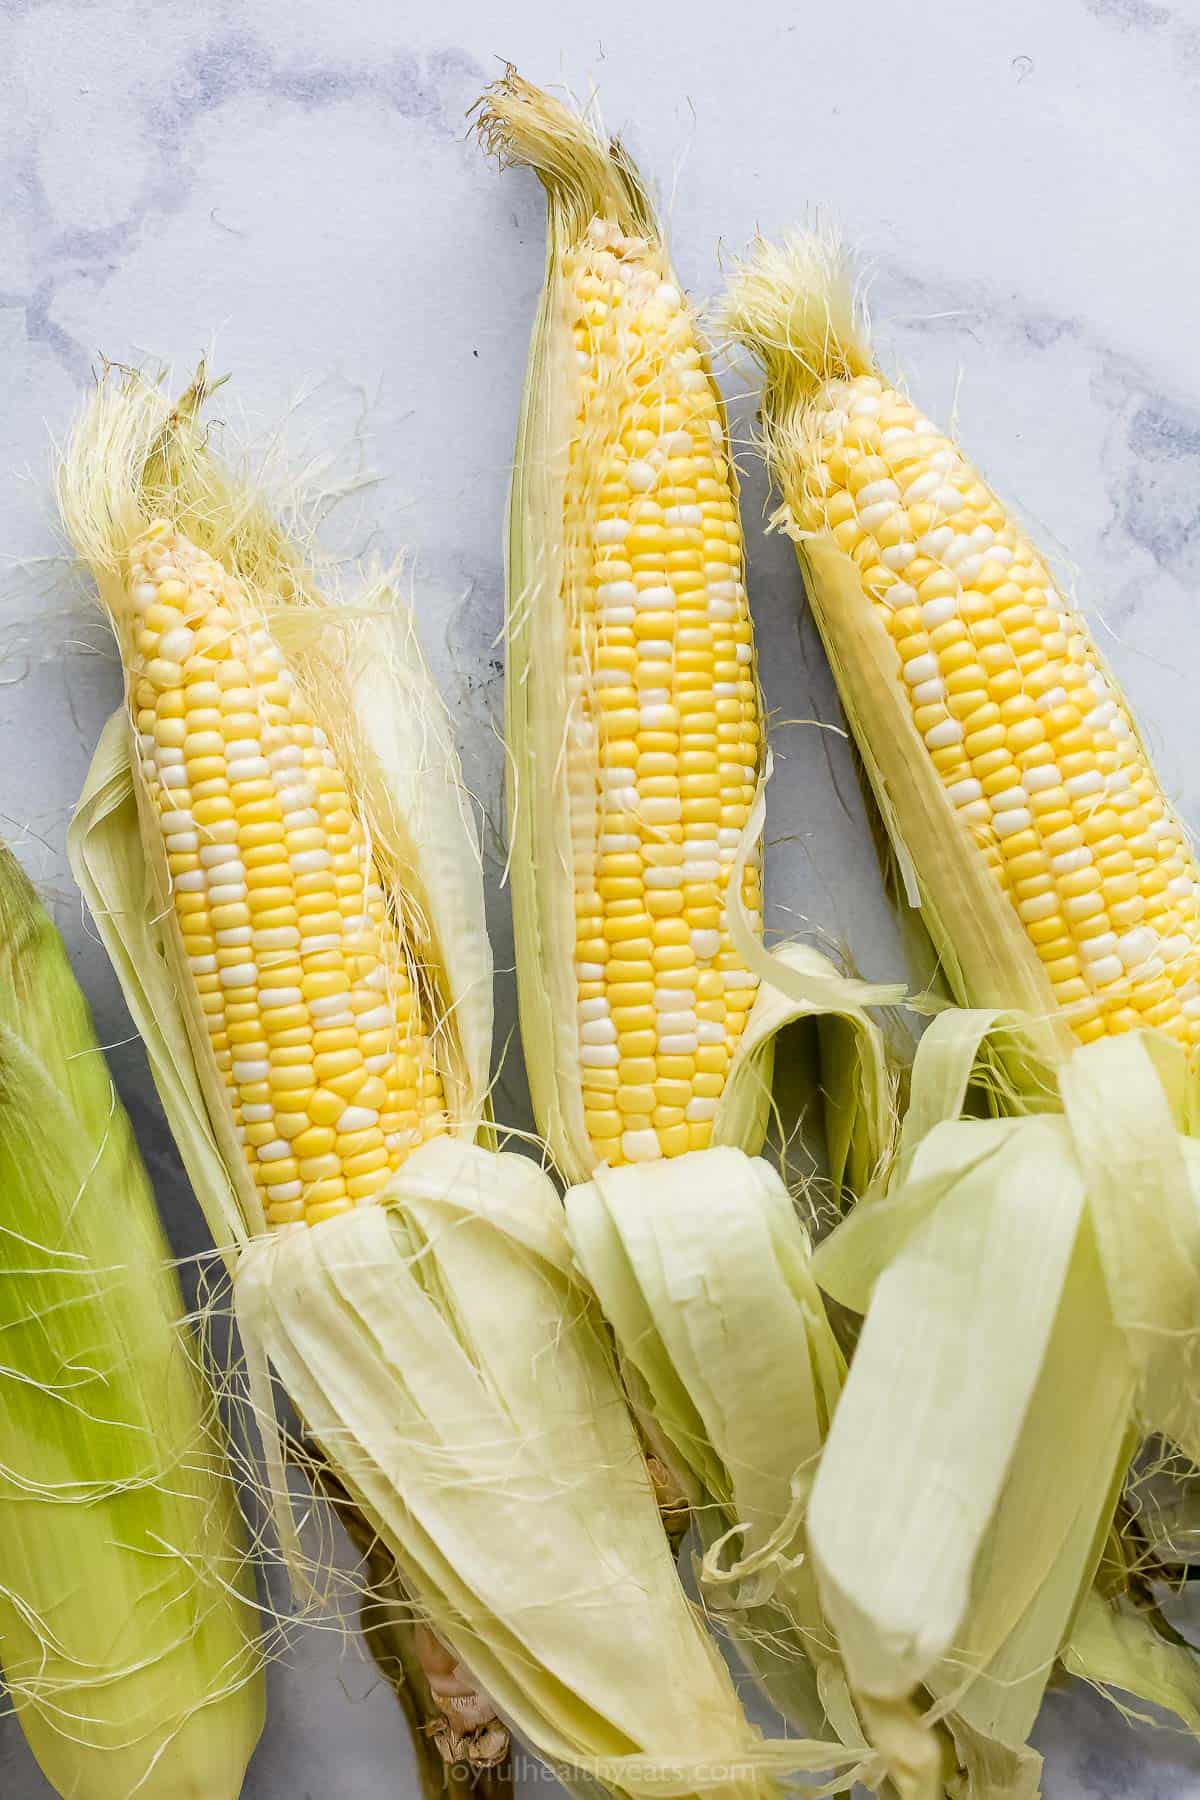 Three ears of corn with the shucks peeled back on one side